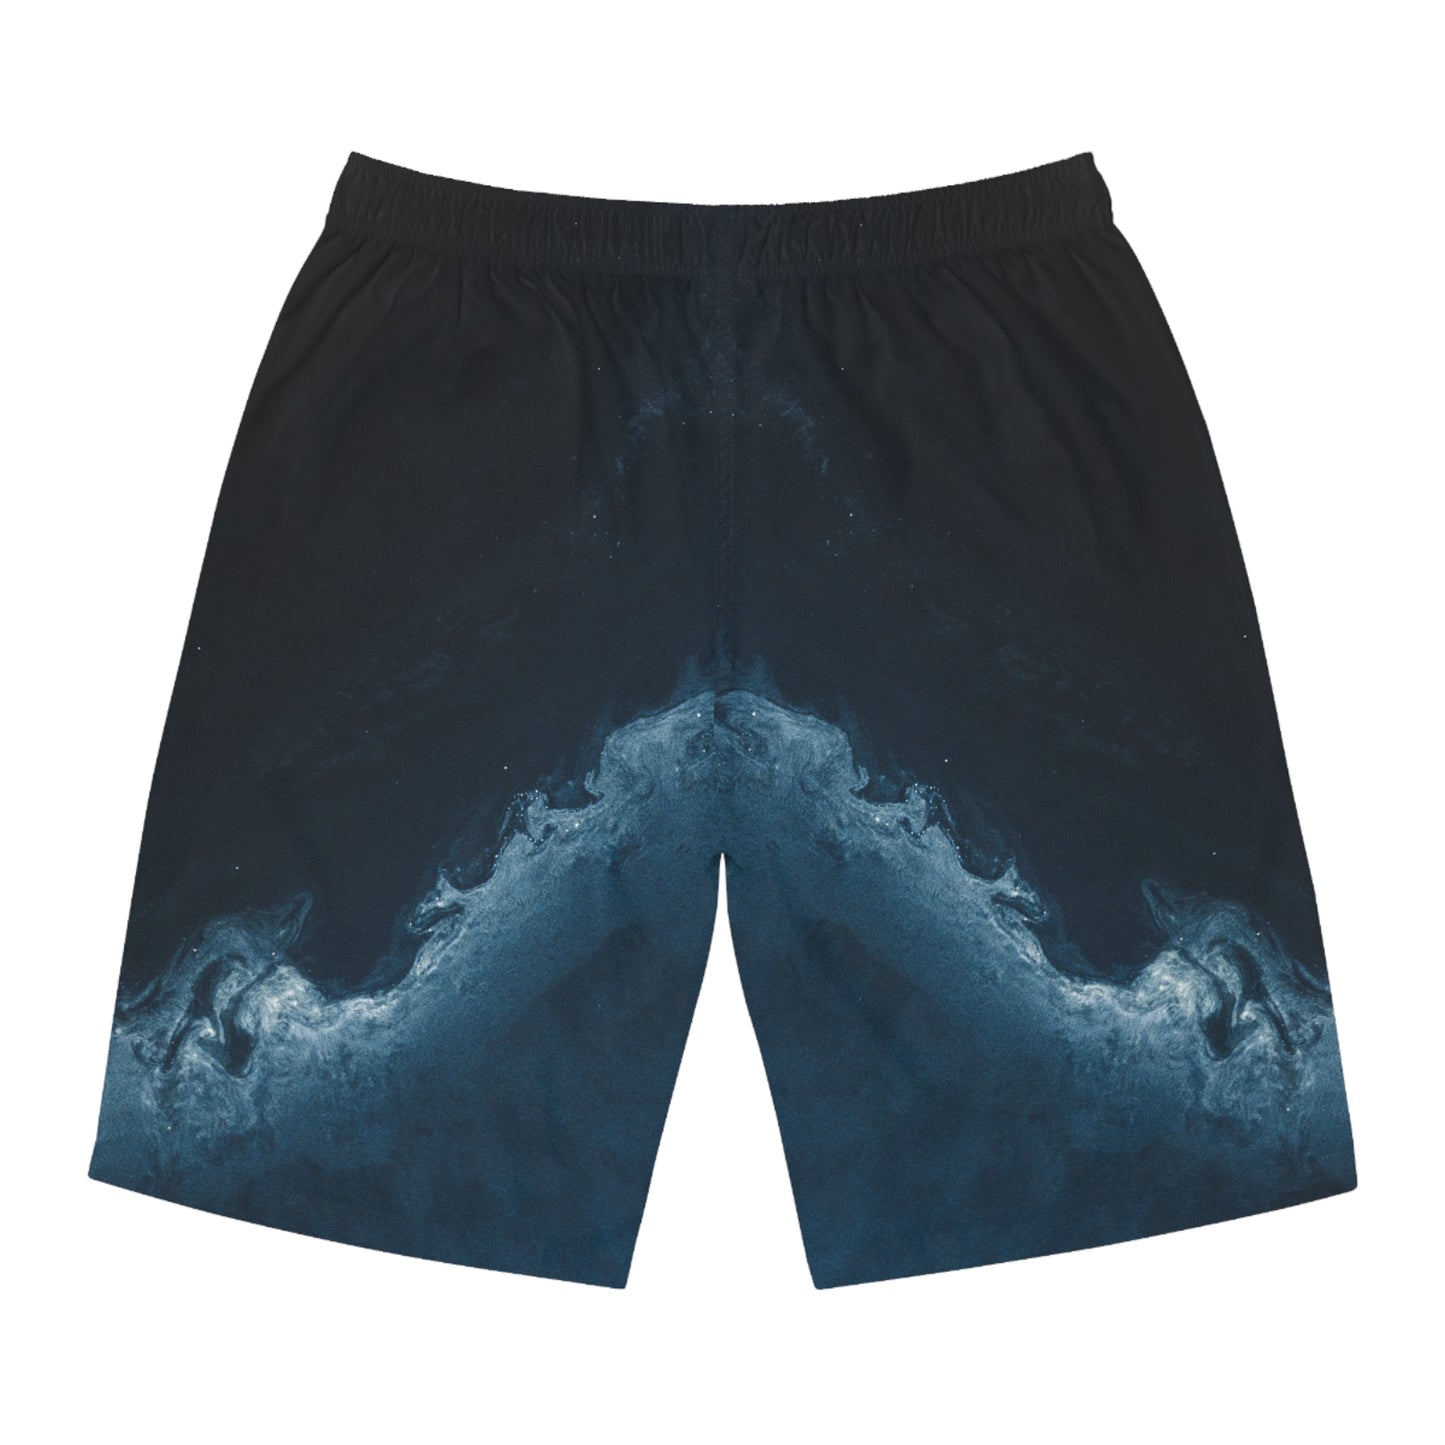 Board Shorts | Ocean Inspired - Ribooa